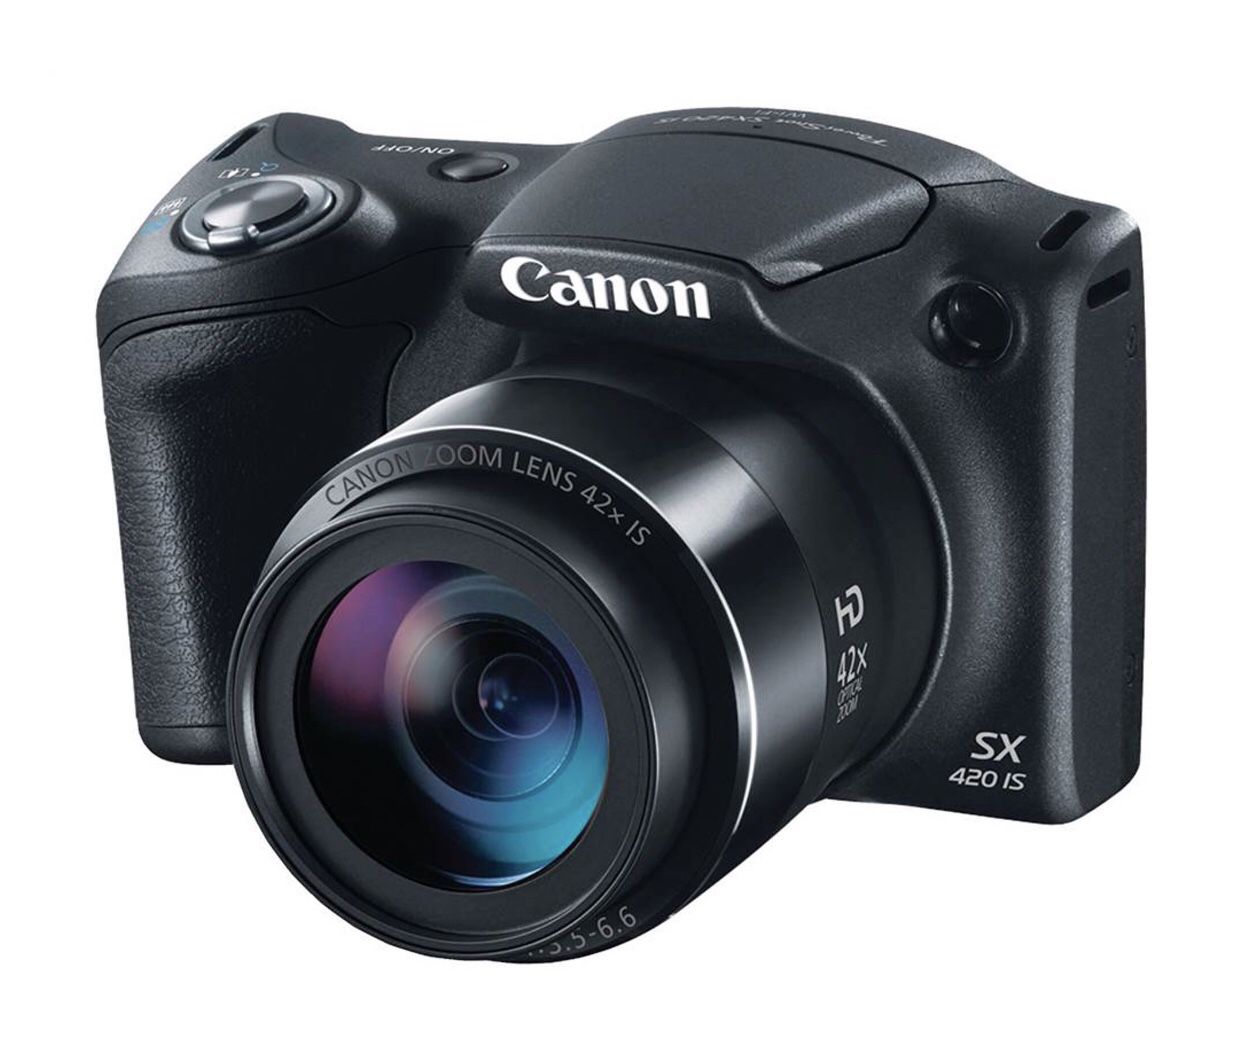 BRAND NEW Canon Powershot SX420 IS